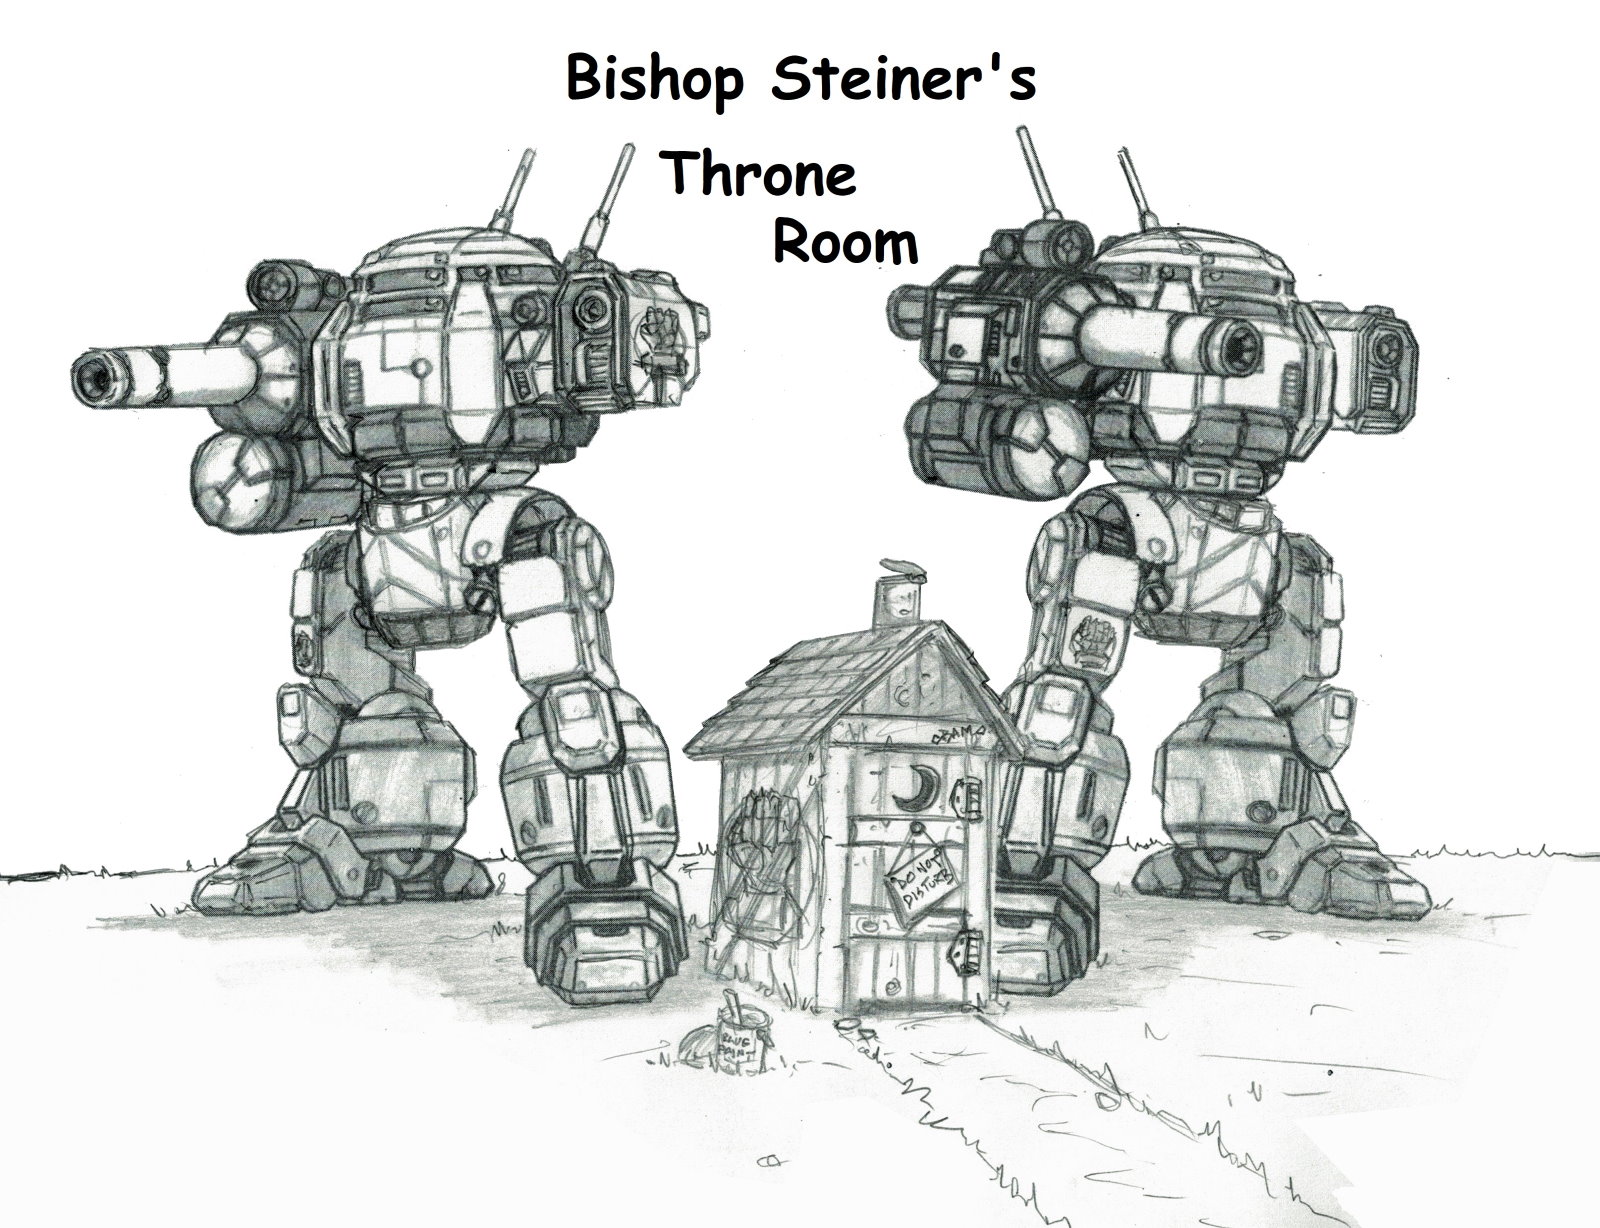 Bishop's Throne Room